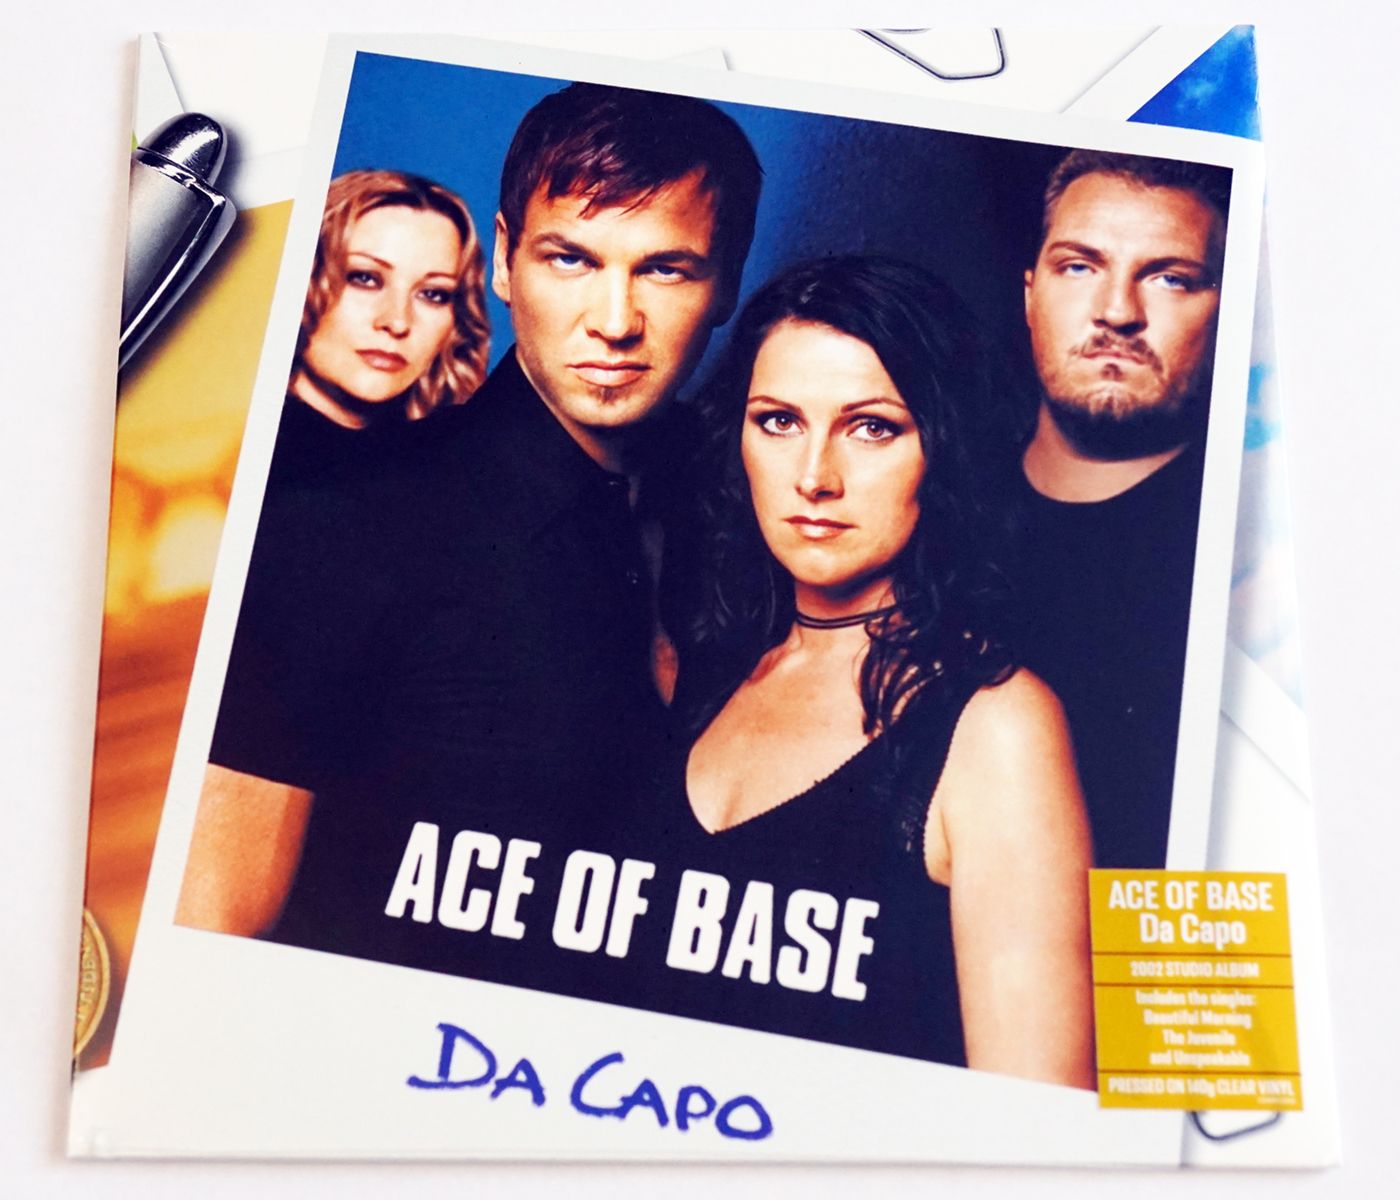 Mandee feat ace of base. Группа Ace of Base 2020. Ace of Base пластинка. Ace of Base da capo. Ace of Base винил.